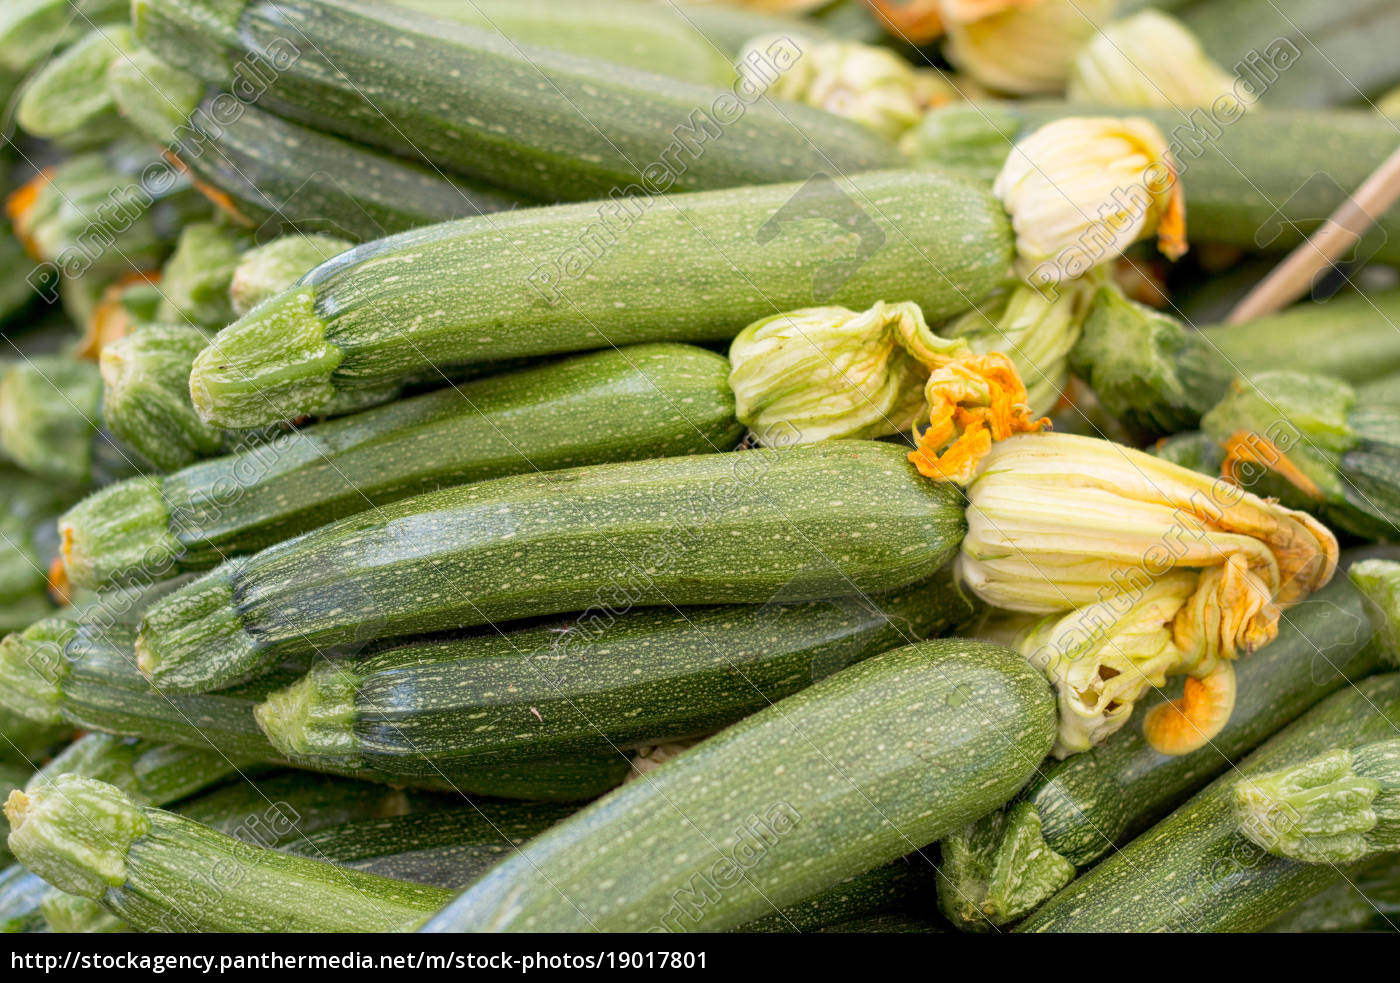 zucchini mit blumen - Stockfoto - #19017801 | Bildagentur PantherMedia